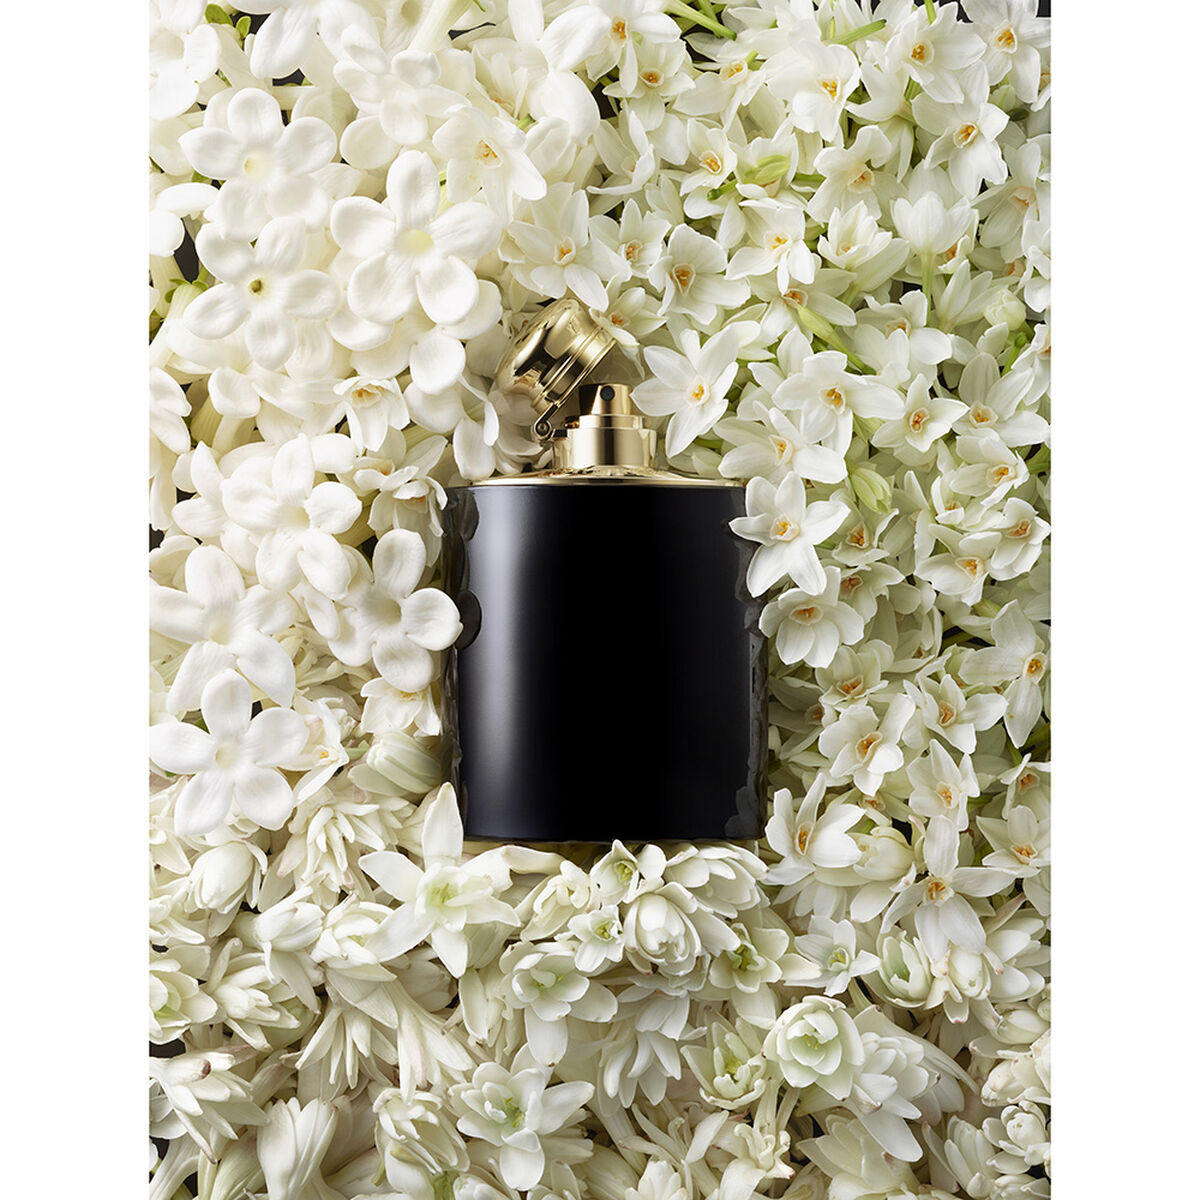 Perfume Ralph Lauren Woman Intense Black 30 ml